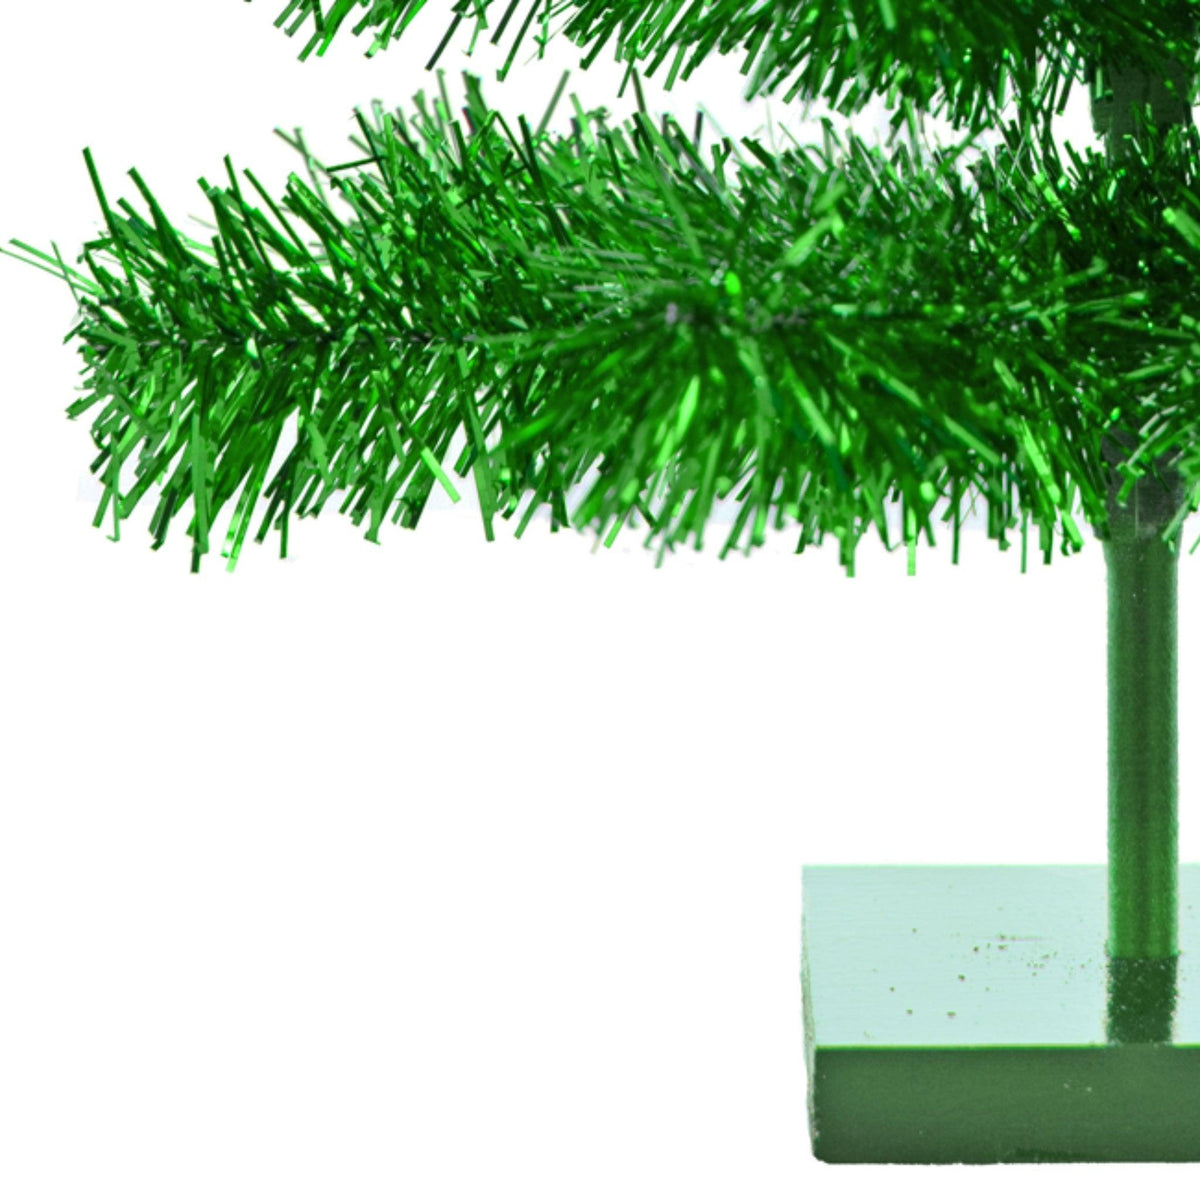 Metallic Green Christmas Tree - Lee Display